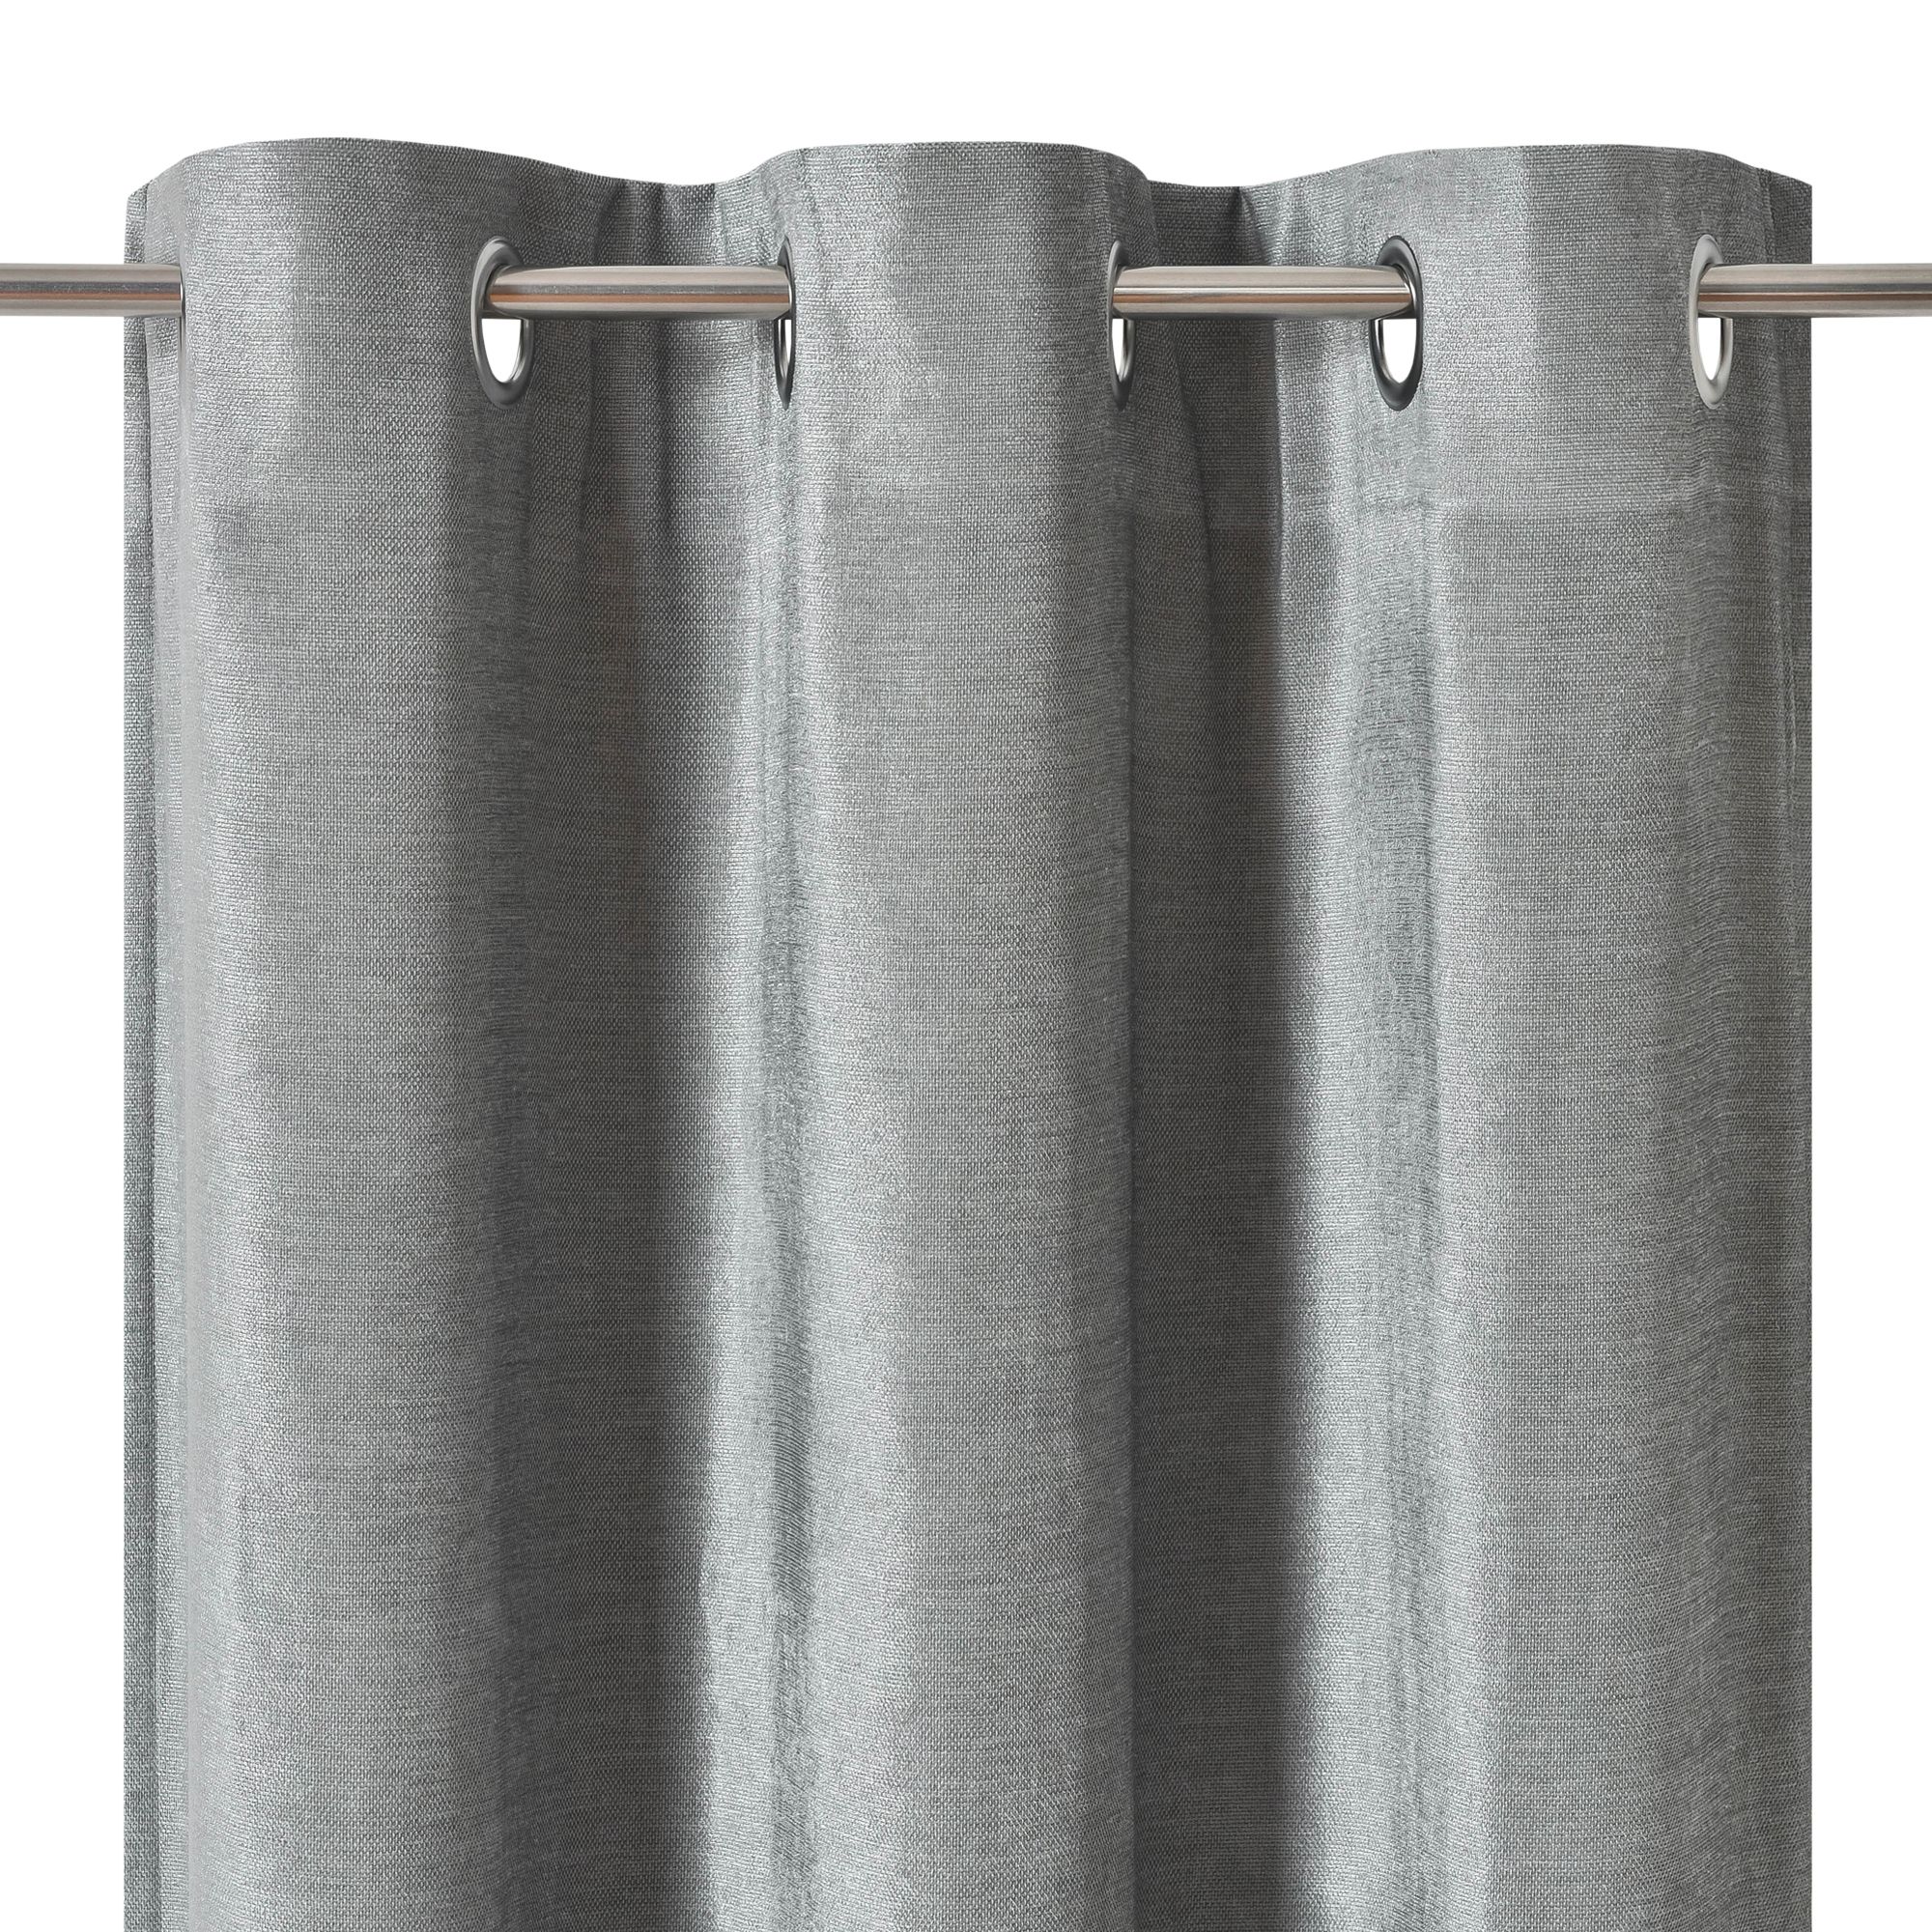 Arntzen Grey Plain woven Lined Eyelet Curtain (W)167cm (L)183cm, Pair